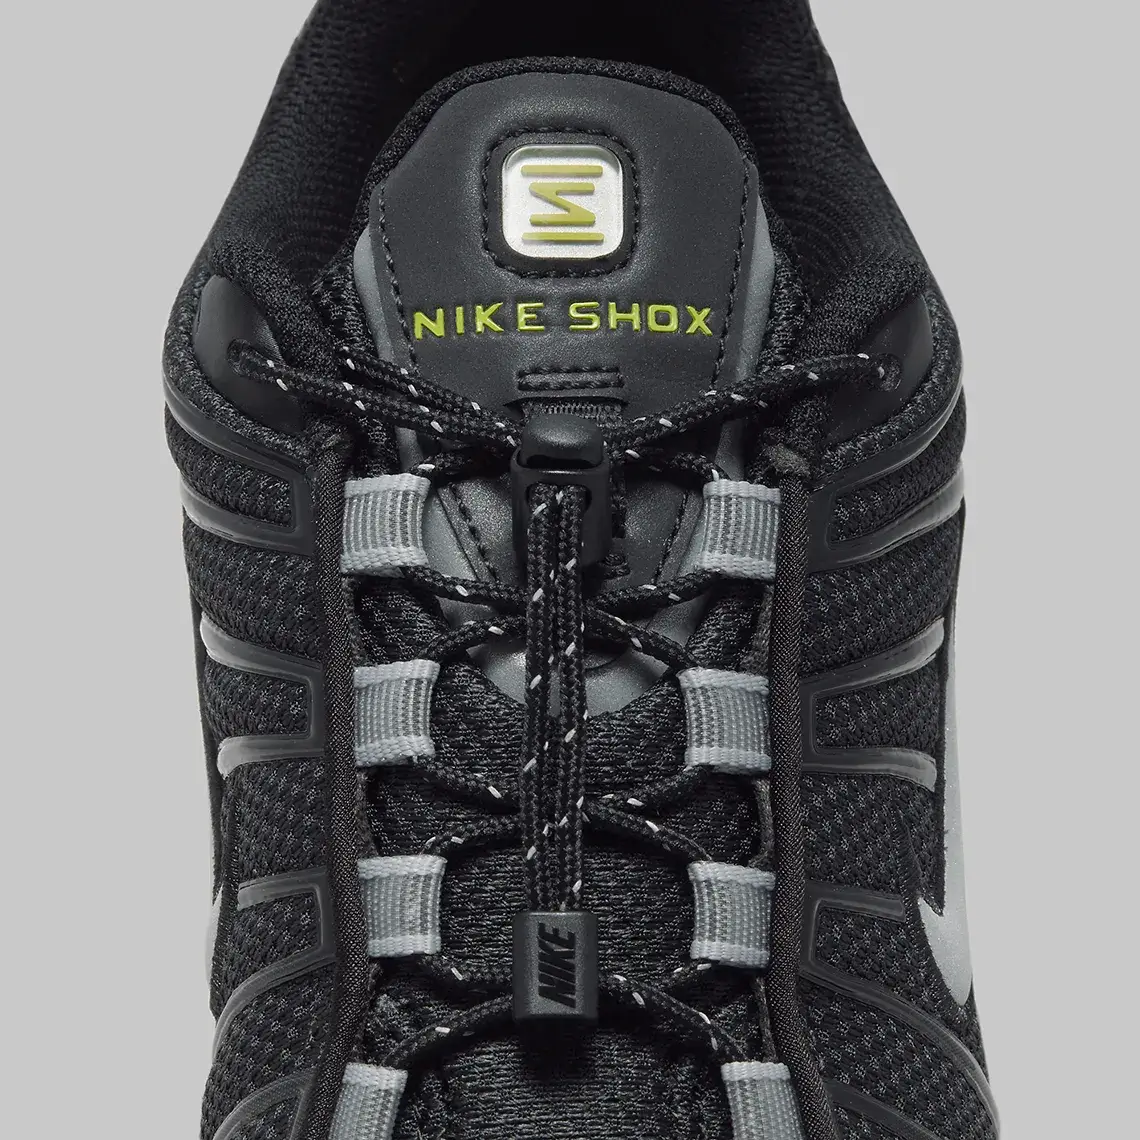 Nike Shox TL Resurfaces Black And Grey This Fall 2023